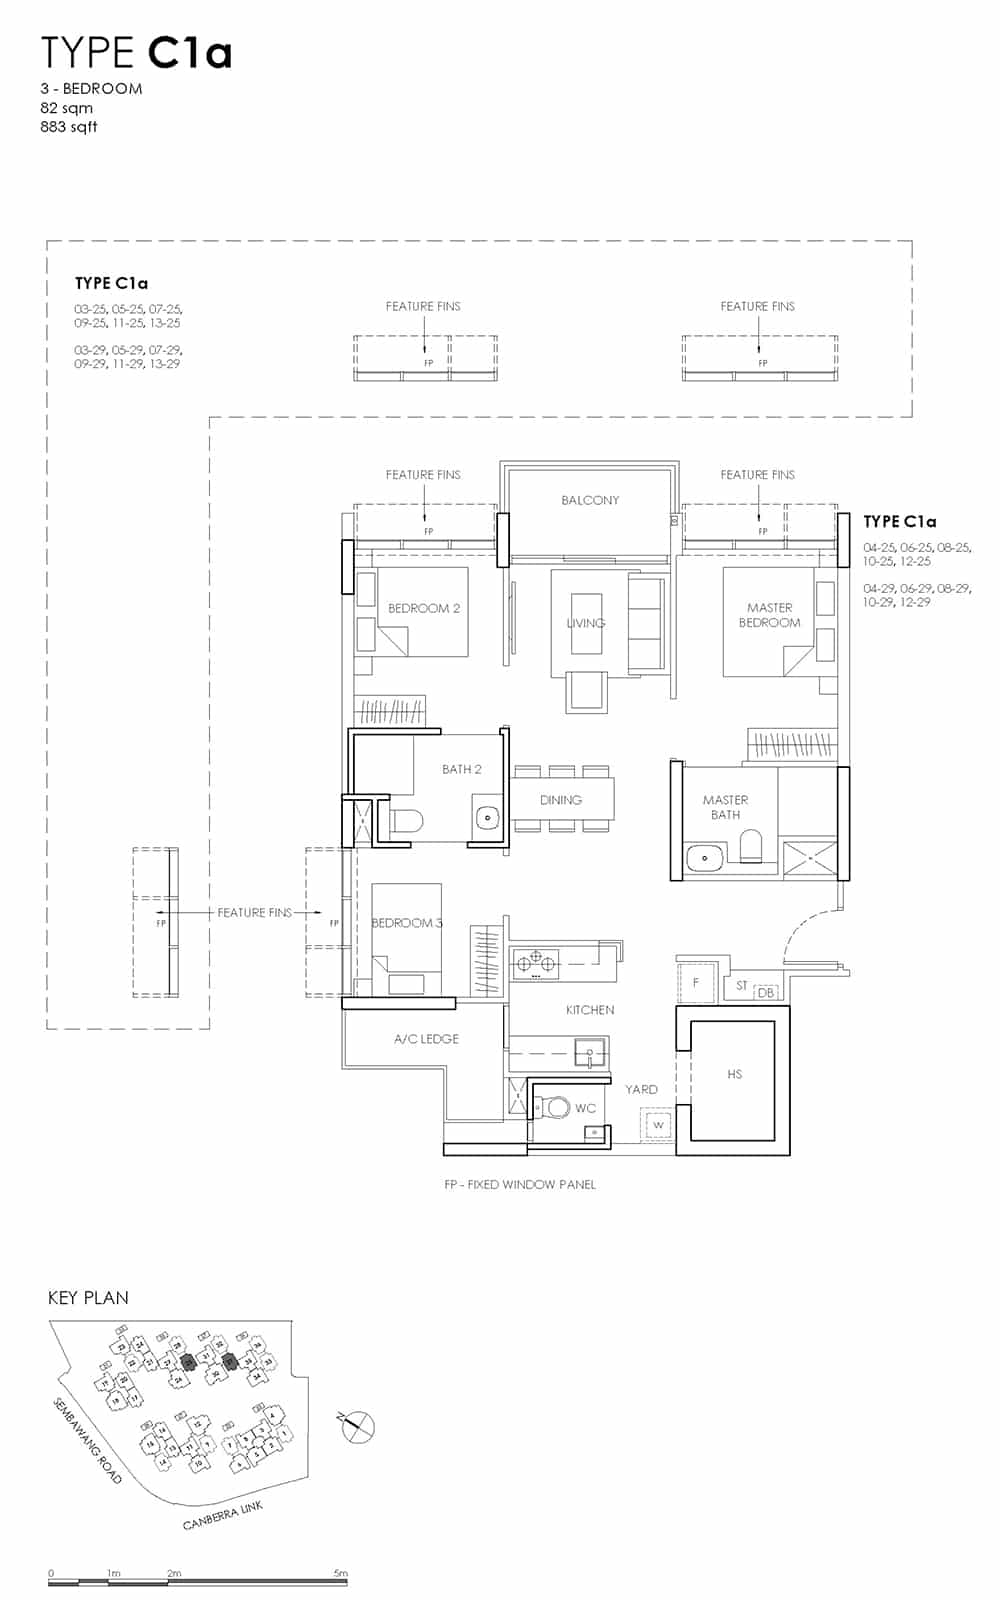 Provence Residence EC Floor Plans - 3 Bedroom C1a